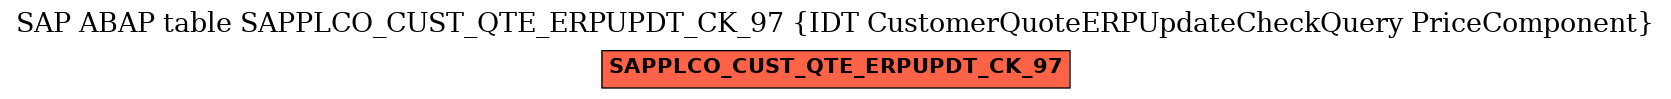 E-R Diagram for table SAPPLCO_CUST_QTE_ERPUPDT_CK_97 (IDT CustomerQuoteERPUpdateCheckQuery PriceComponent)